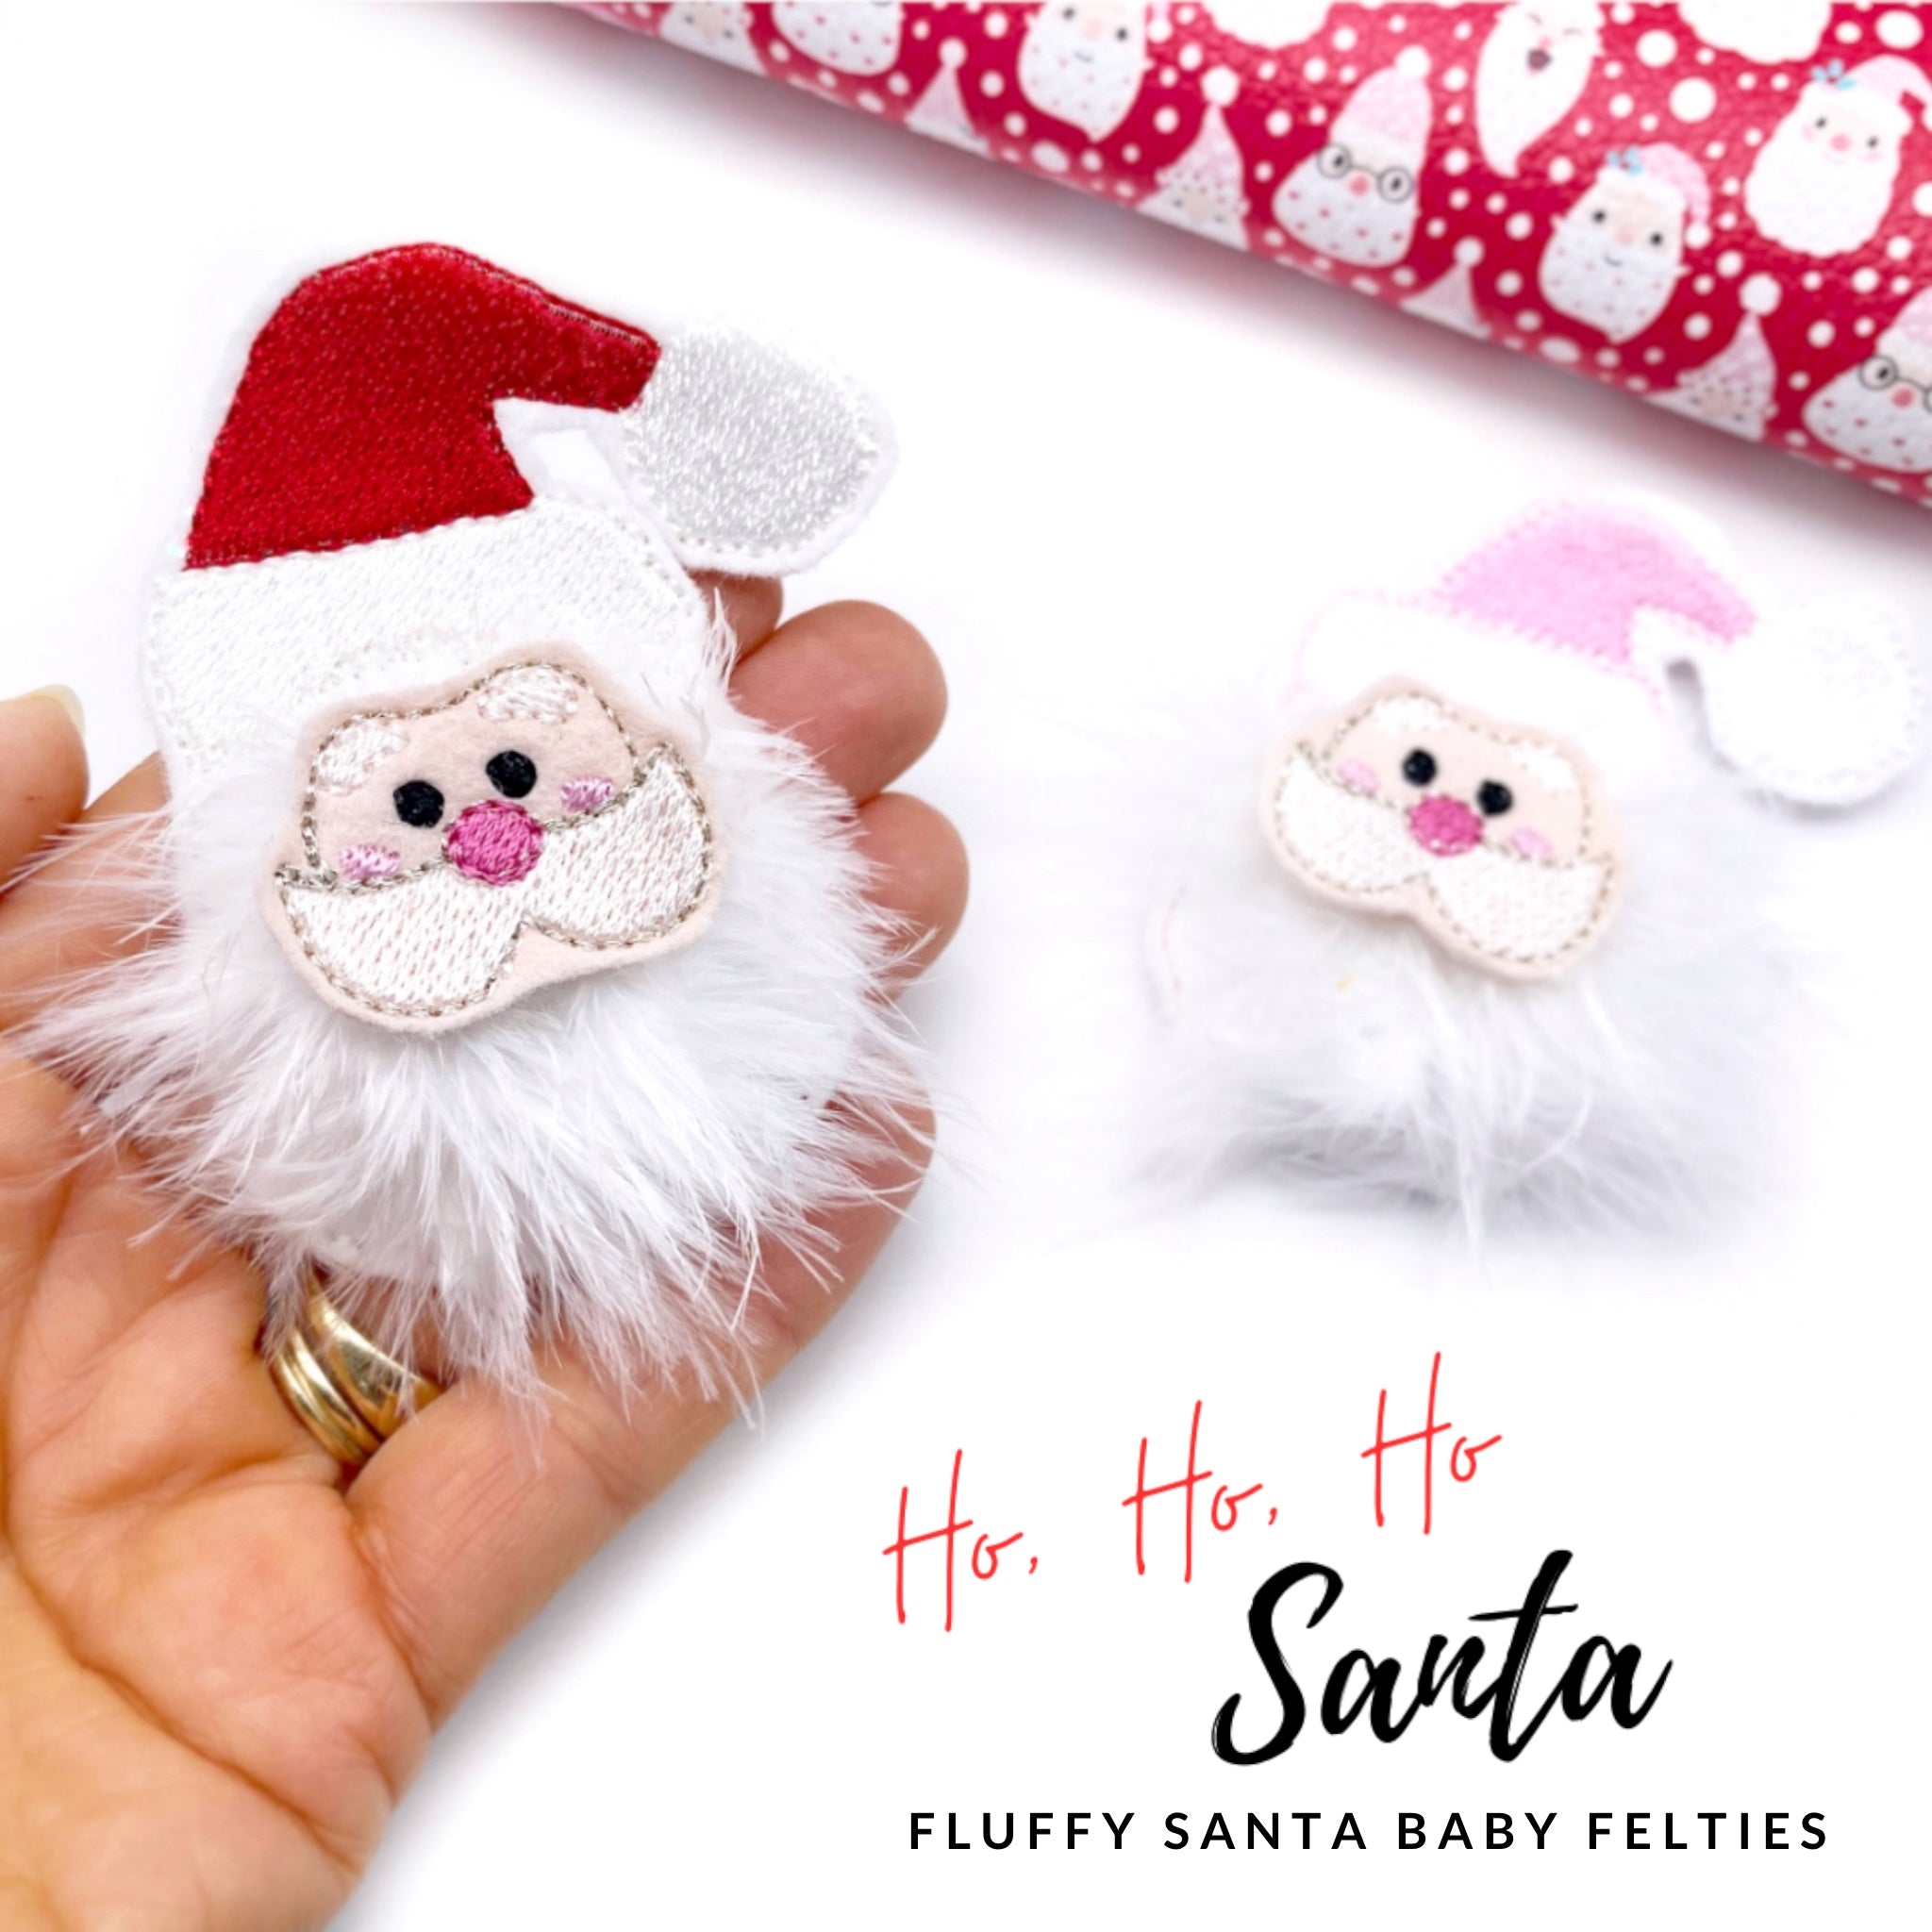 EHC Original Ho, Ho, Ho Santa- Cutest Fluffy Fur Baby Felties